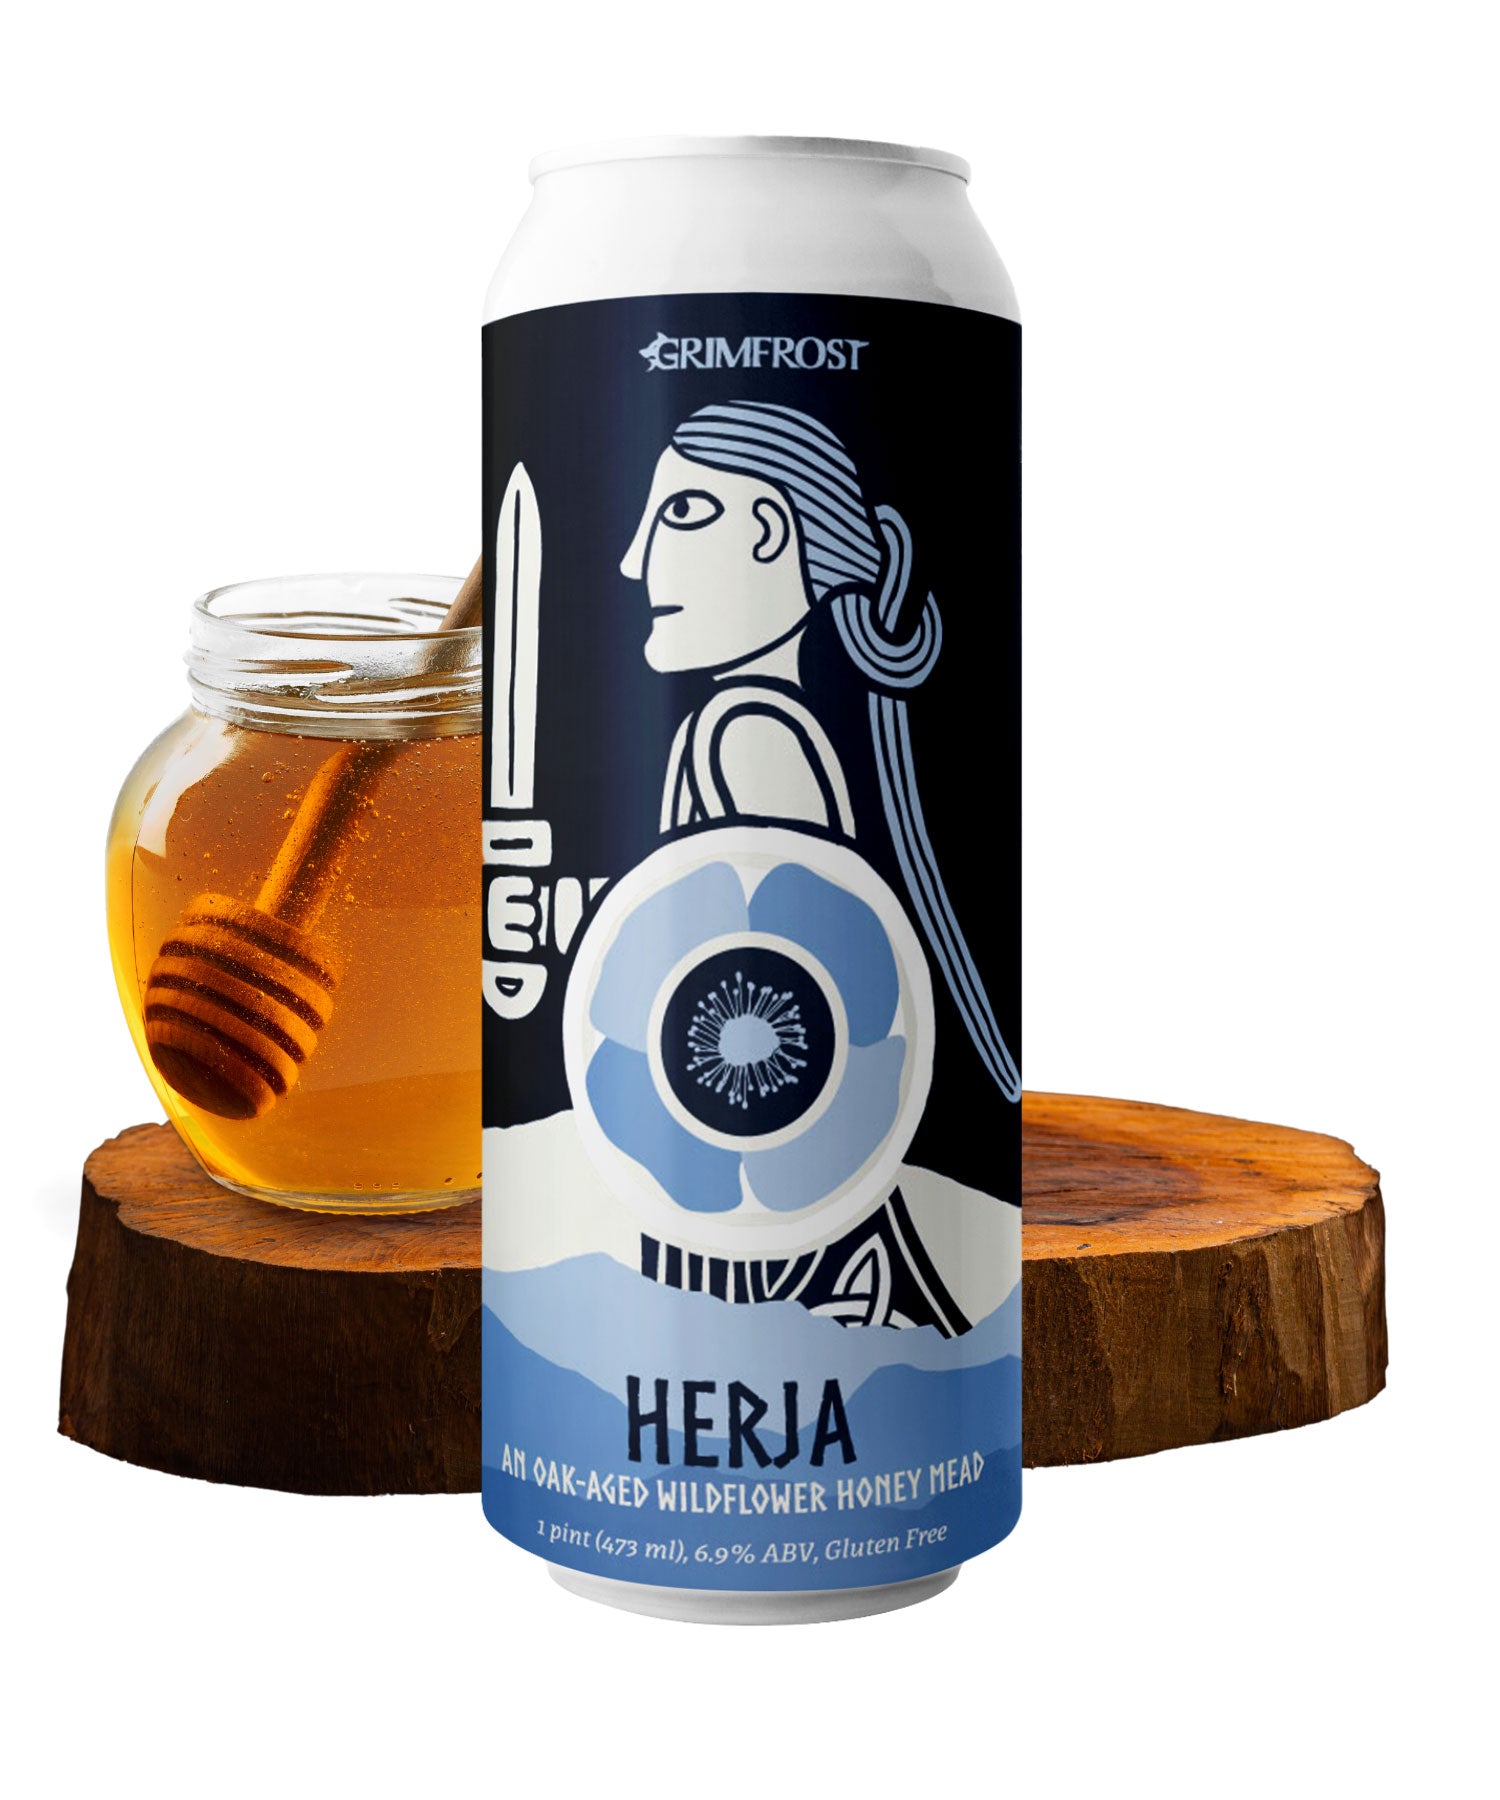 Herja Oak-Aged Wildflower Honey Mead by Grimfrost 4-Pack